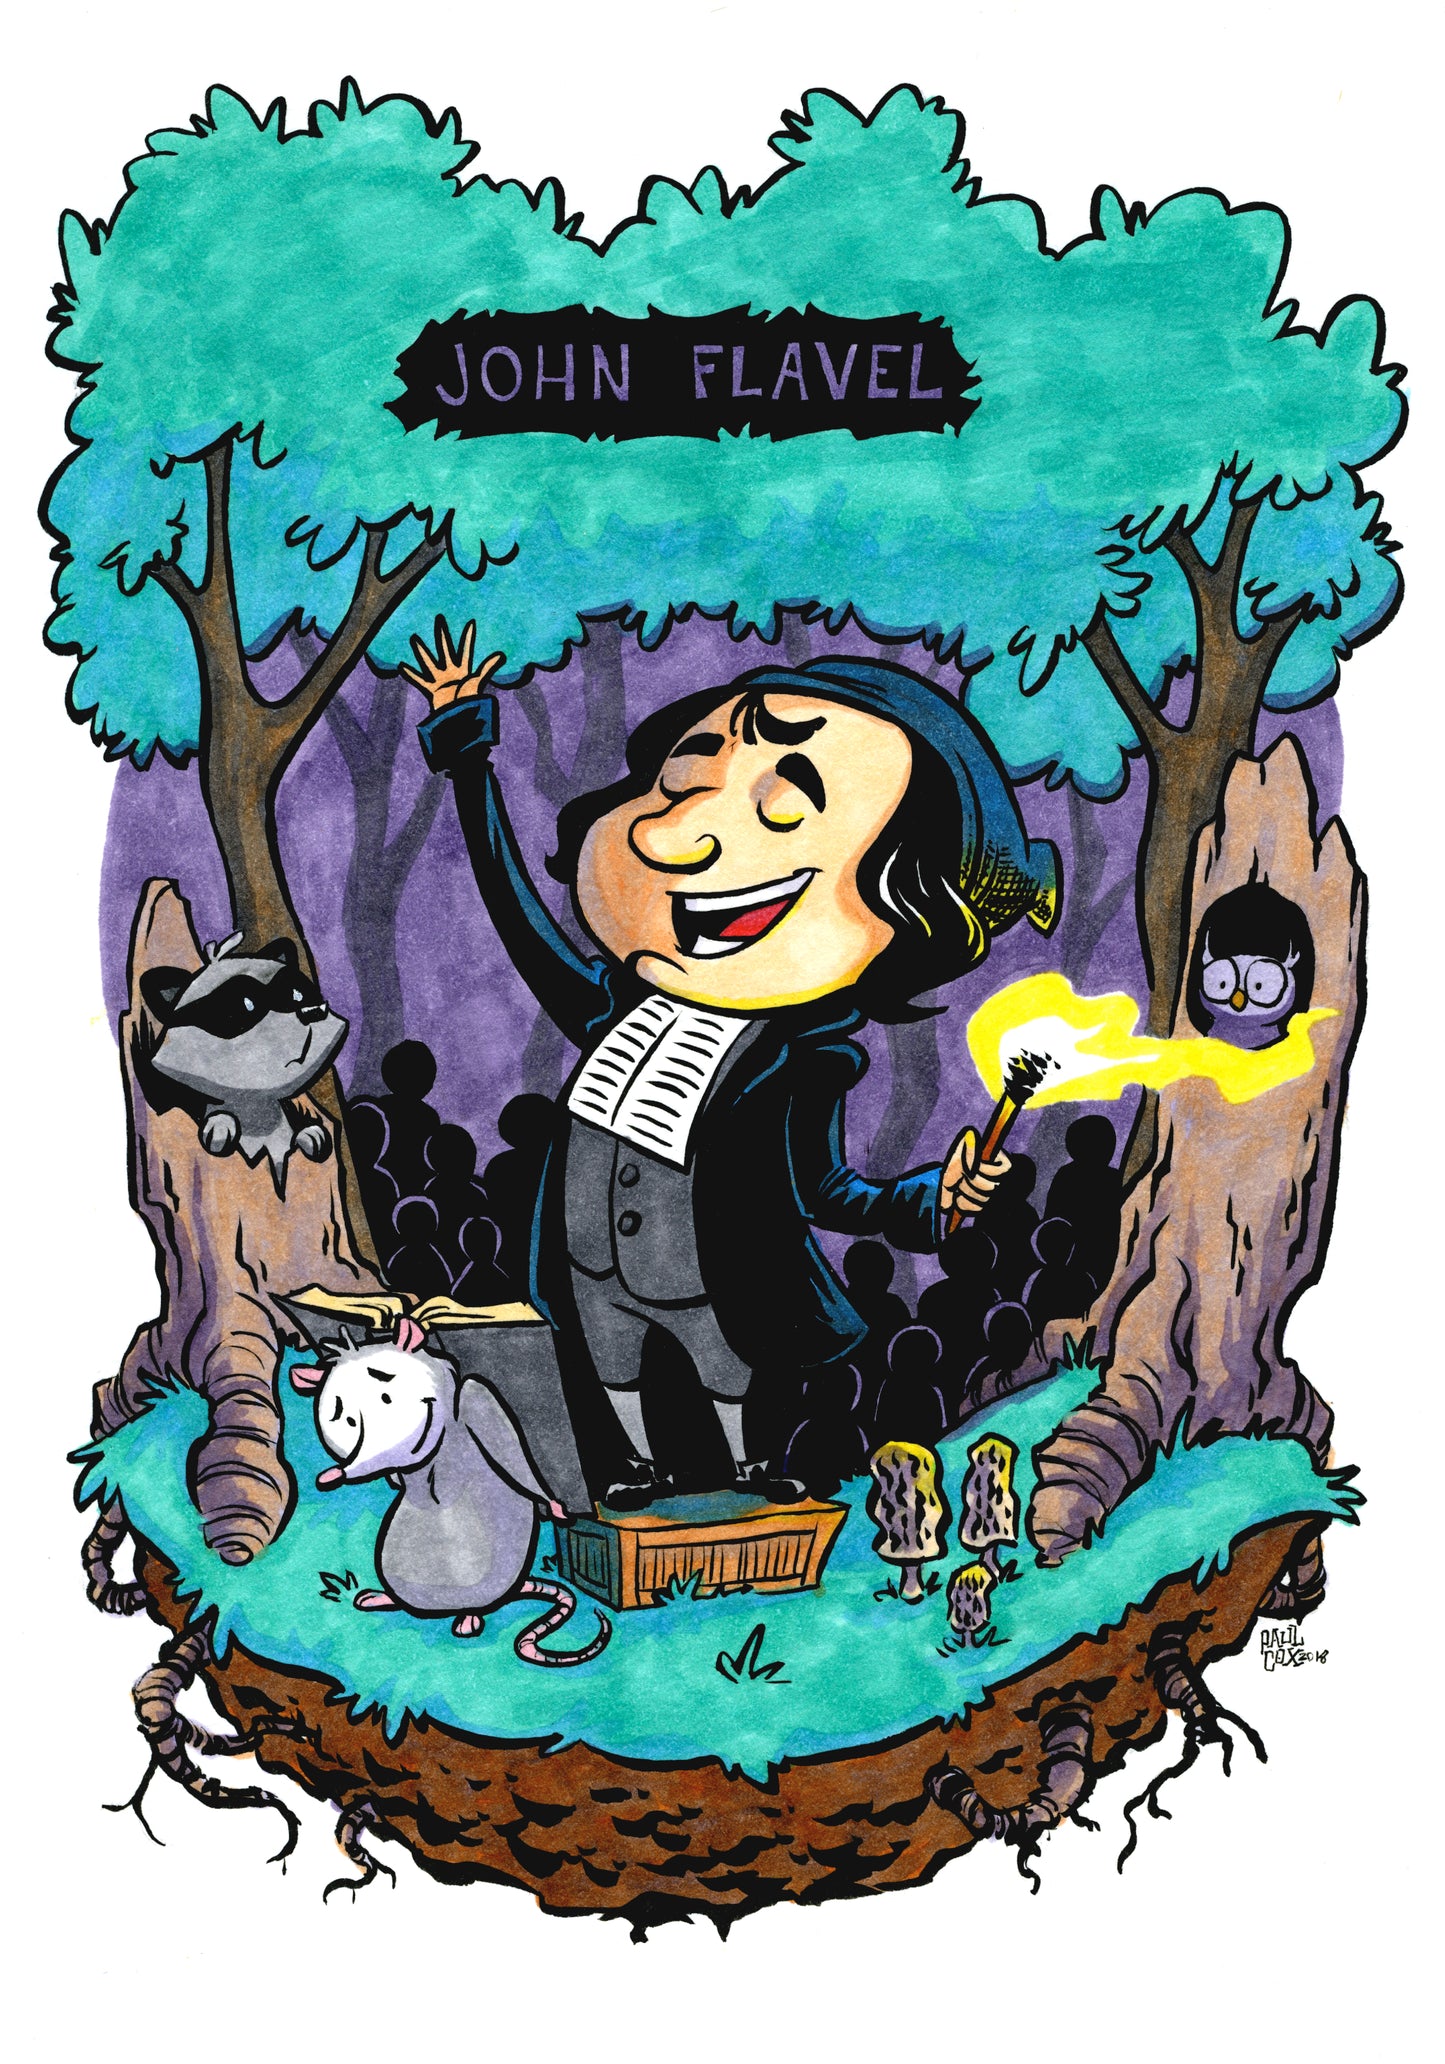 ORIGINAL ART: John Flavel